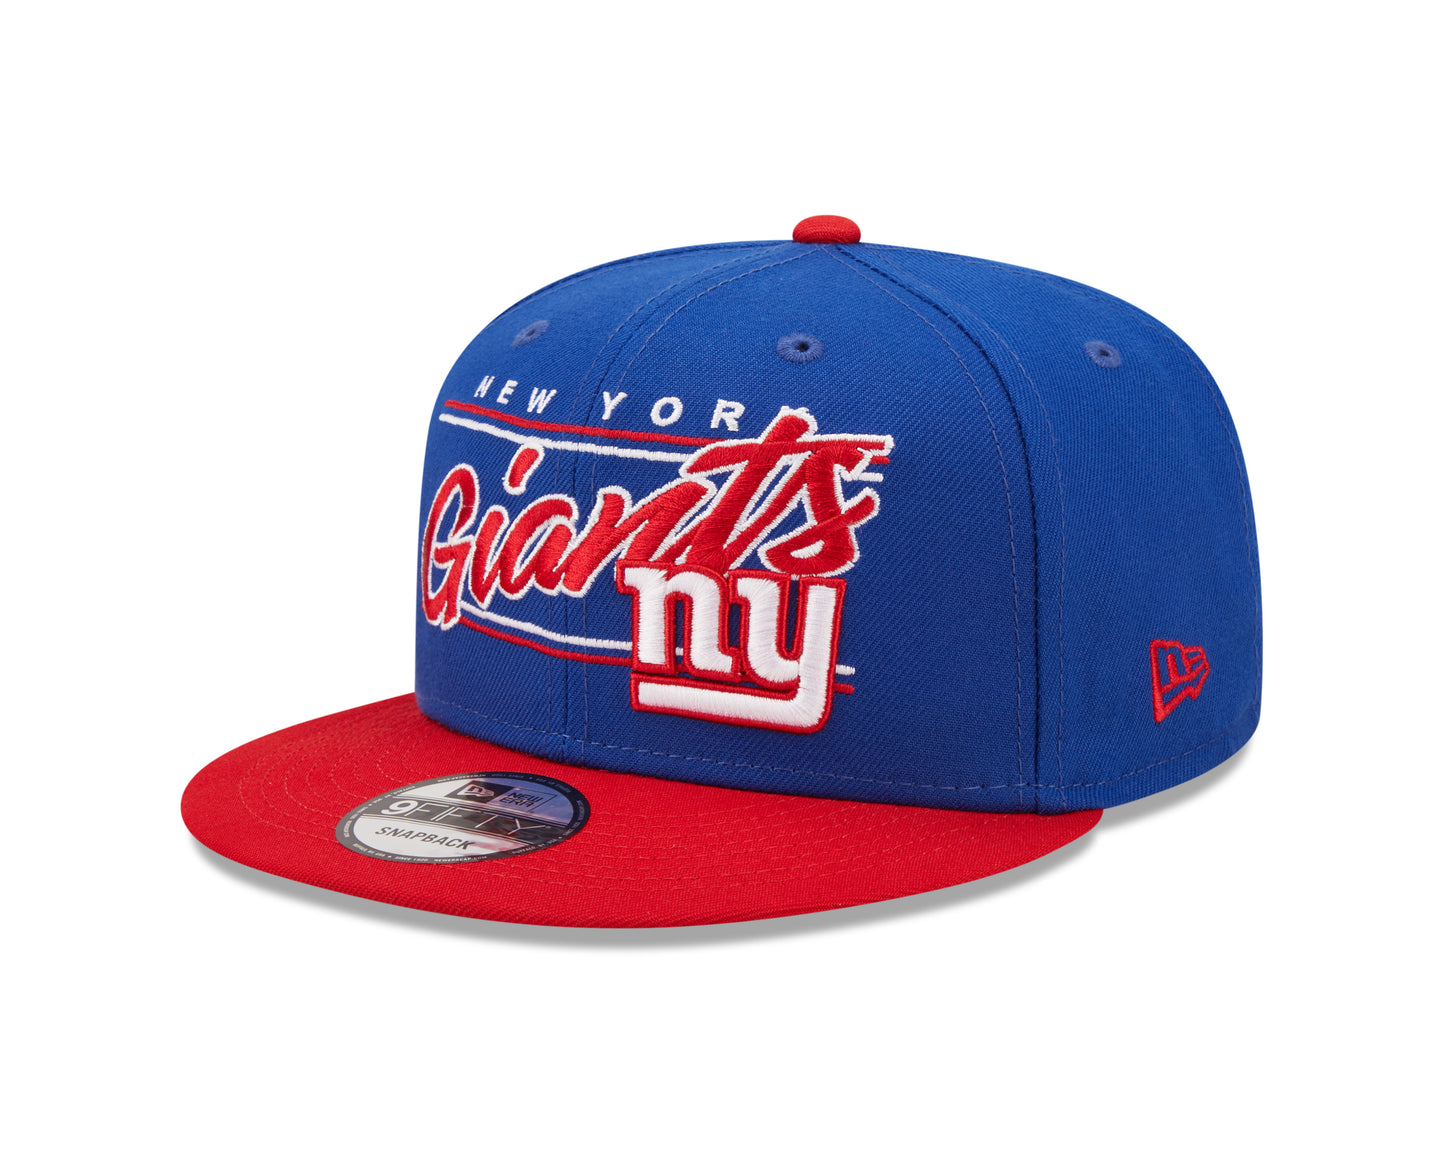 New York Giants NFL New Era Team Script 9FIFTY Snapback Hat - Blue